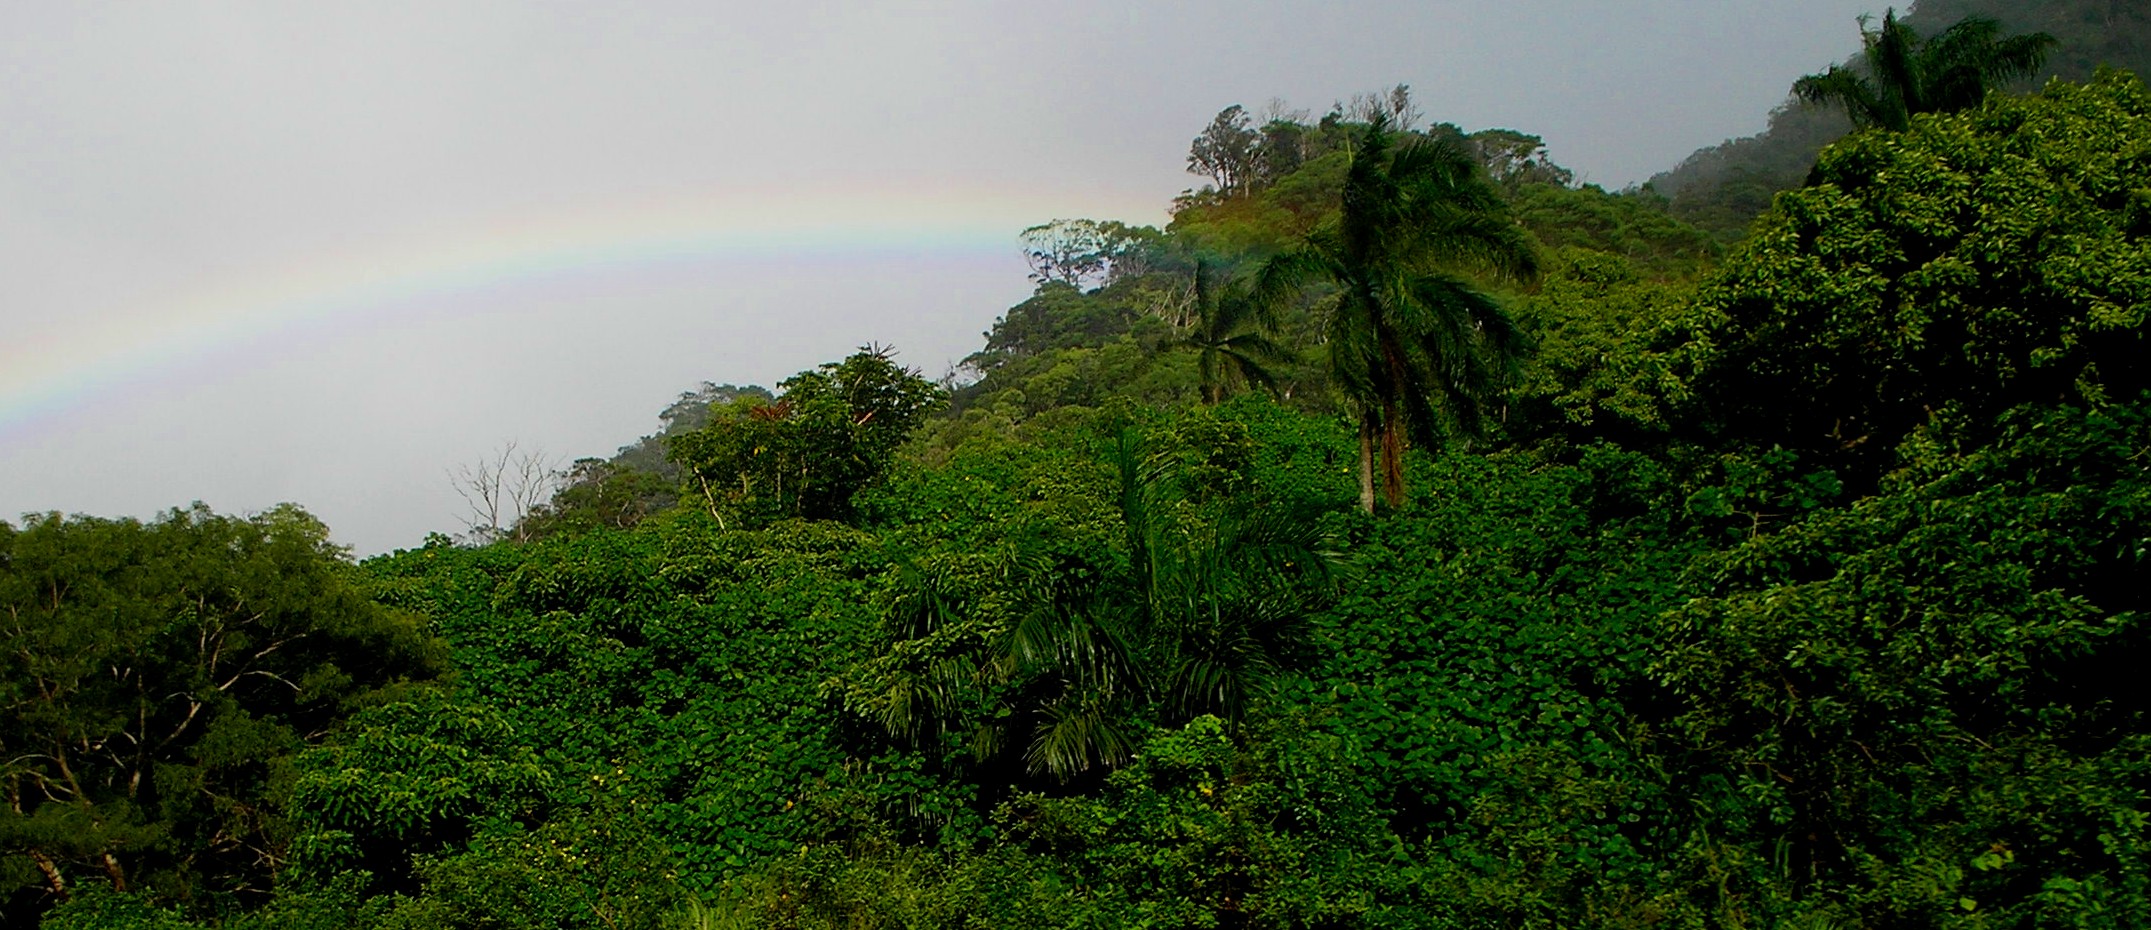 halwa valley rainbow.jpg